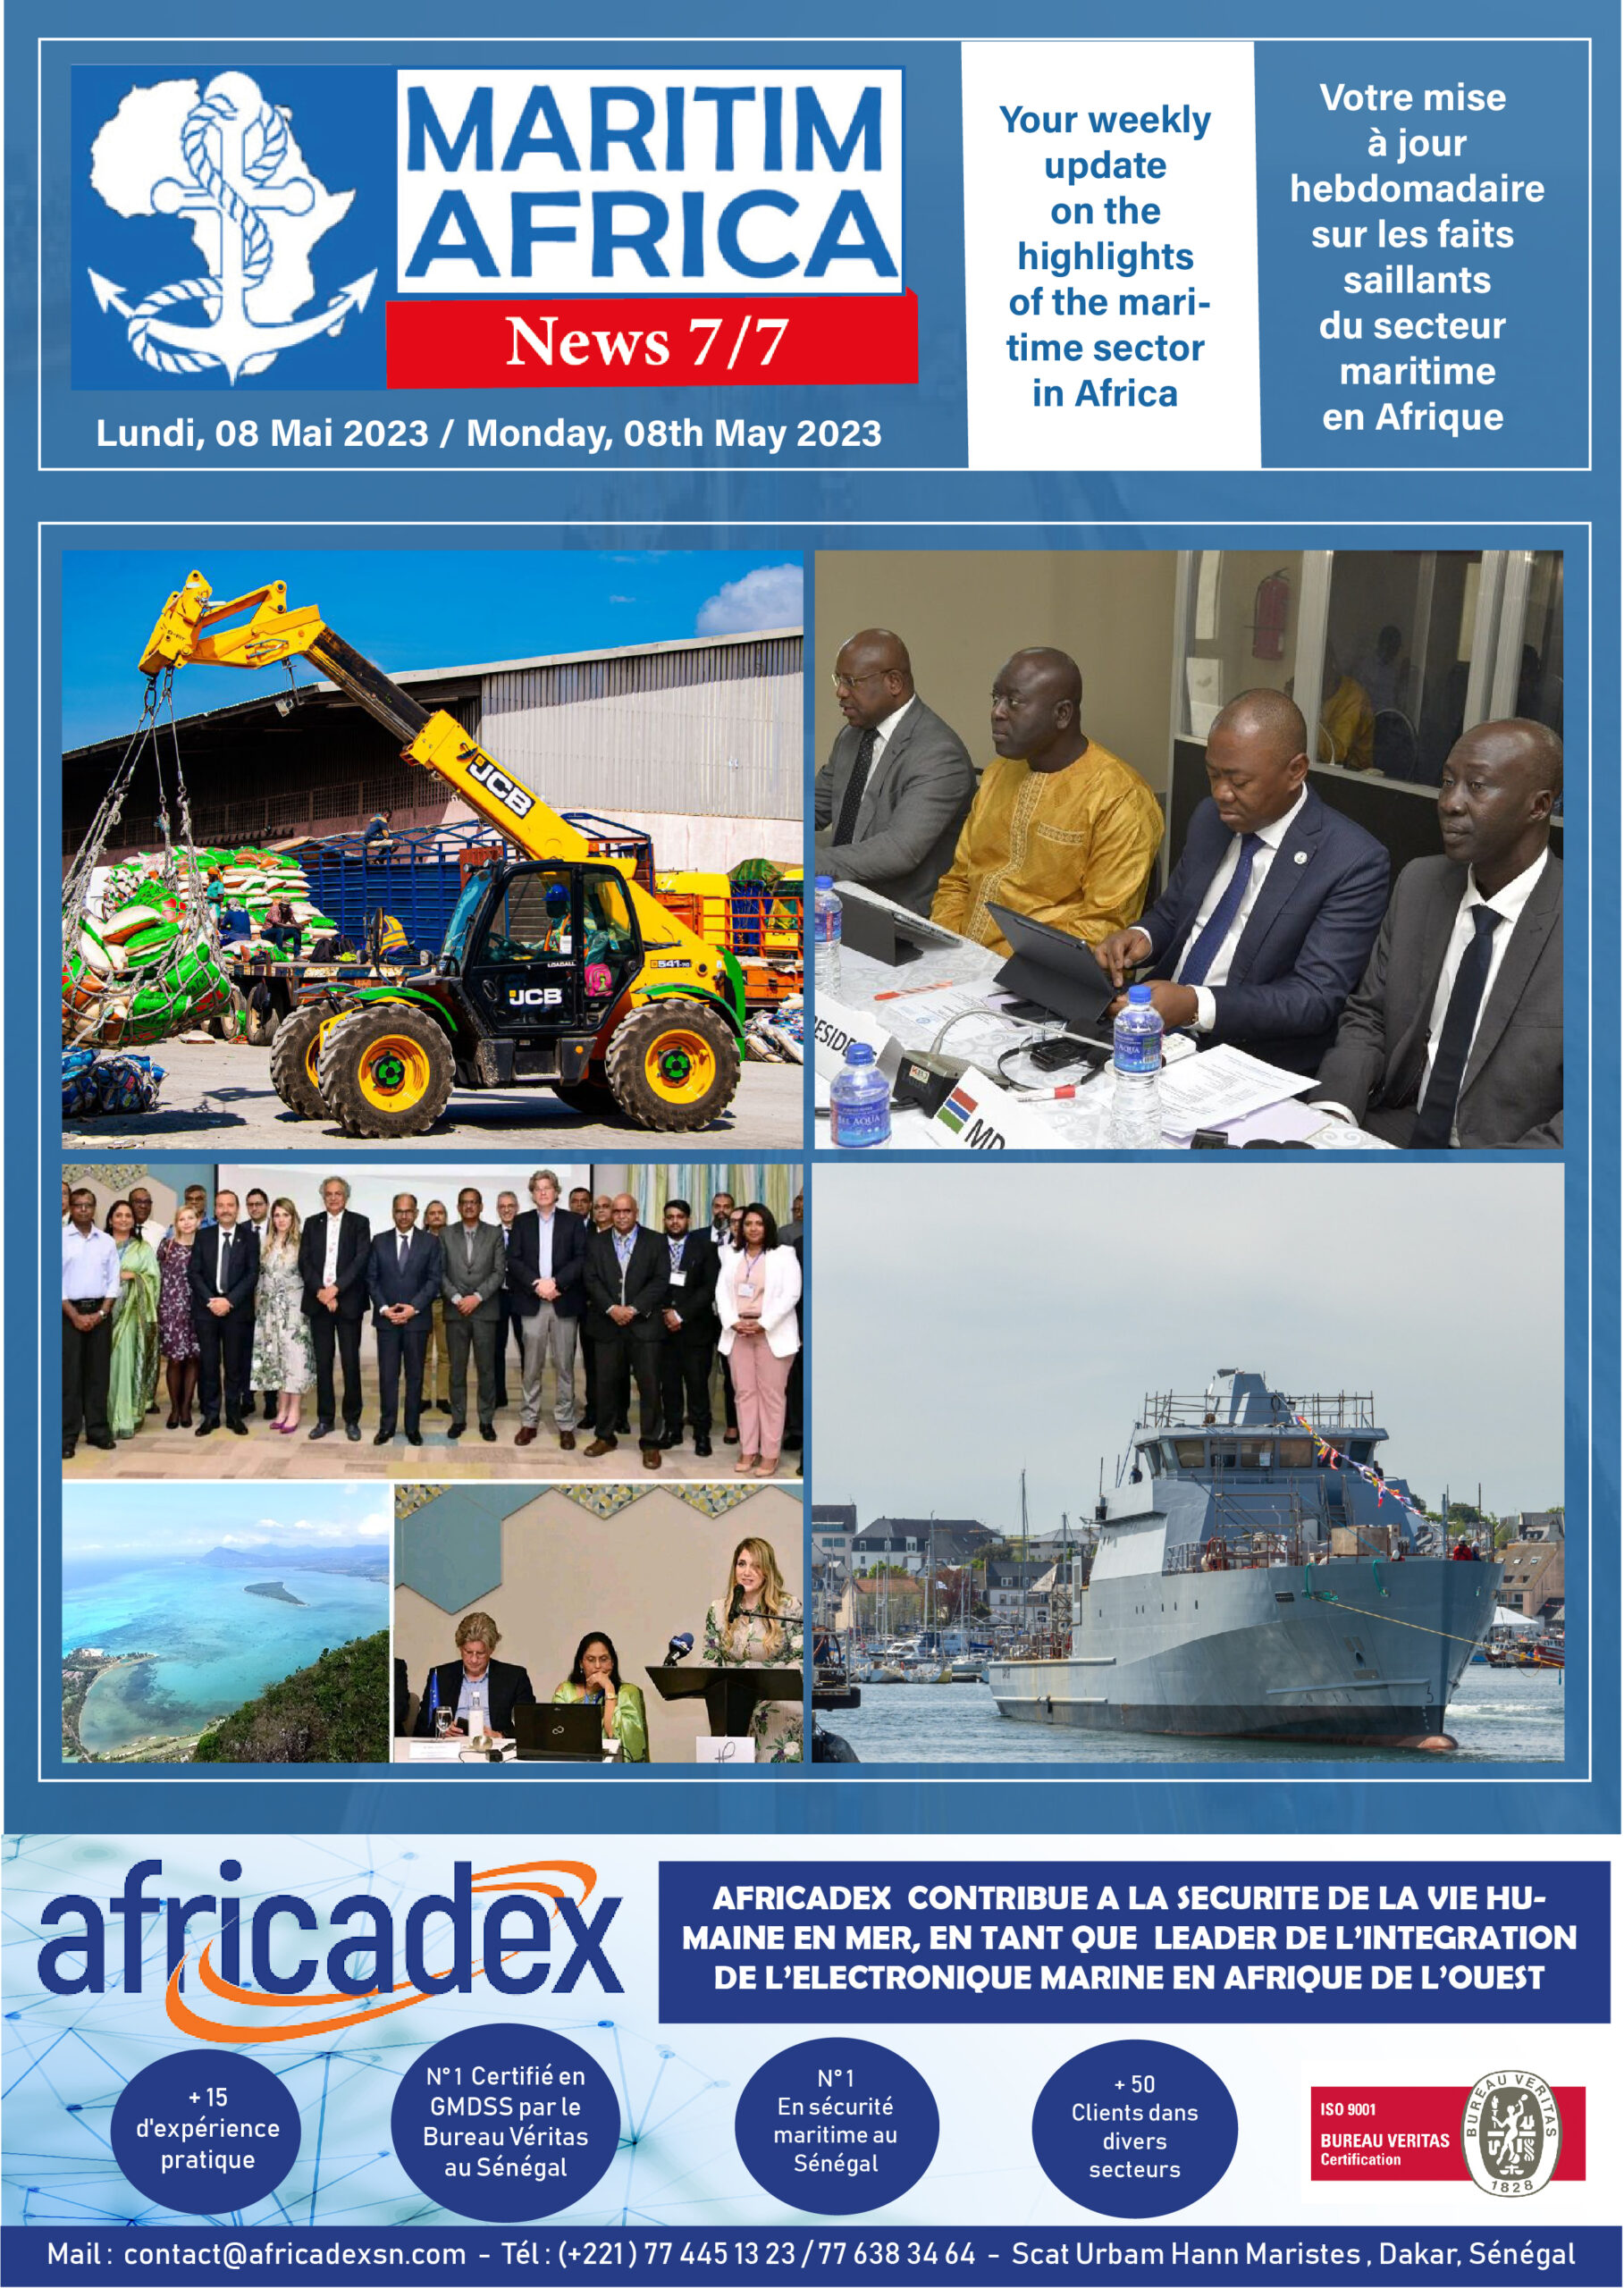 Maritimafrica News 7/7 (Semaine du 1er au 7 mai 2023)